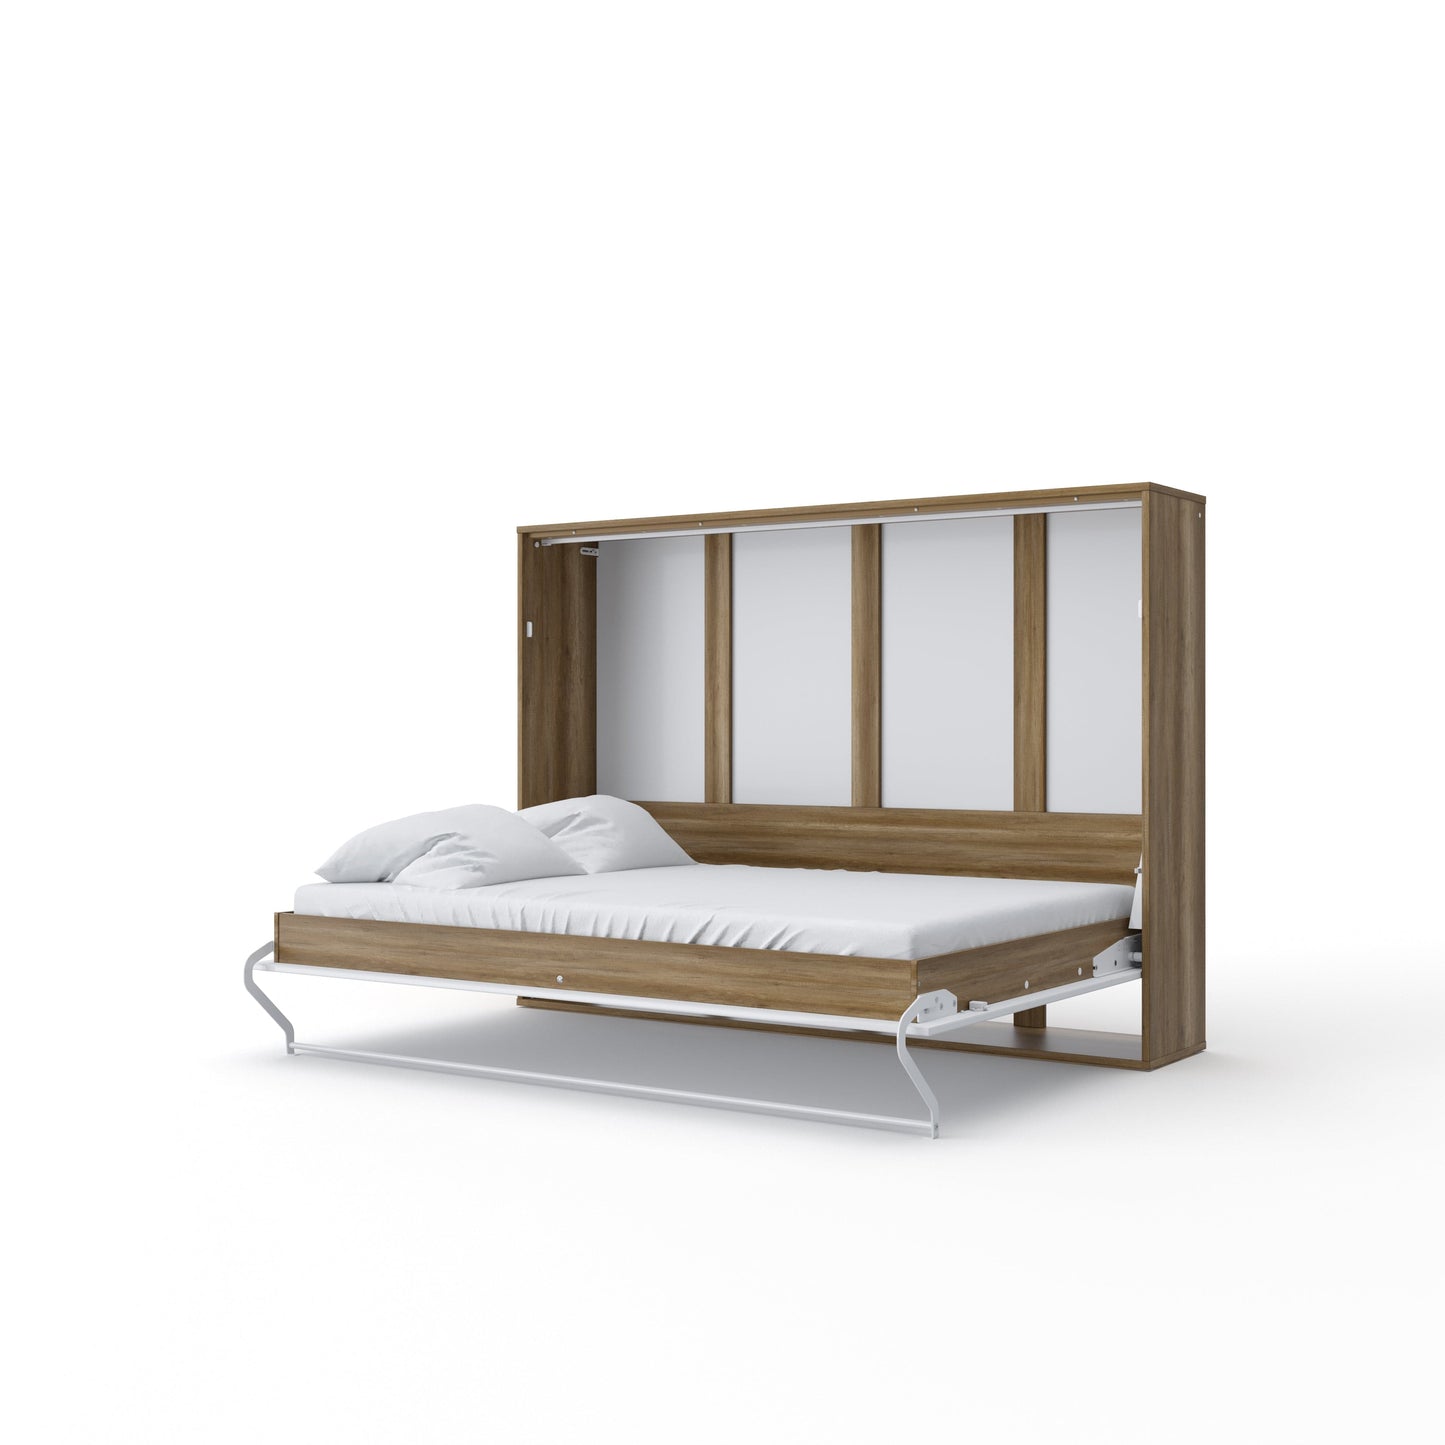 Maxima House Horizontal Murphy Bed INVENTO, European Full XL Size with mattress